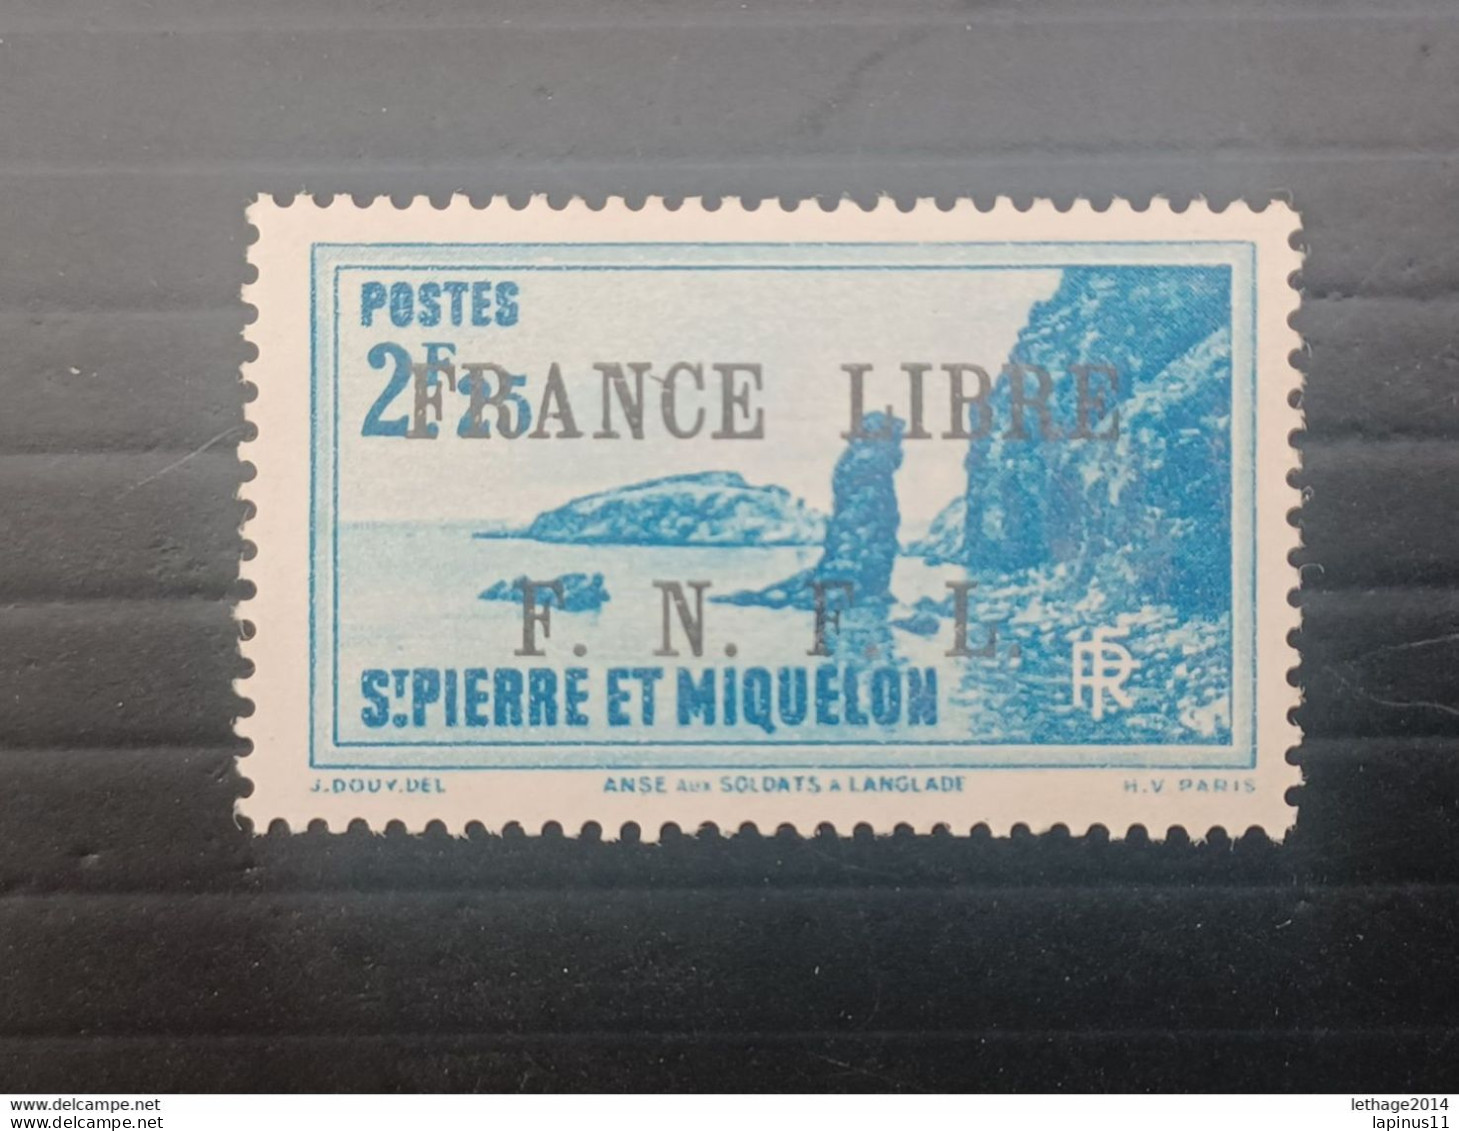 ST PIERRE ET MIQUELLON 1941 STAMPS OF 1922 OVERPRINT FRANCE LIBRE F N F L CAT. YVERT N. 269 MNG - Nuevos